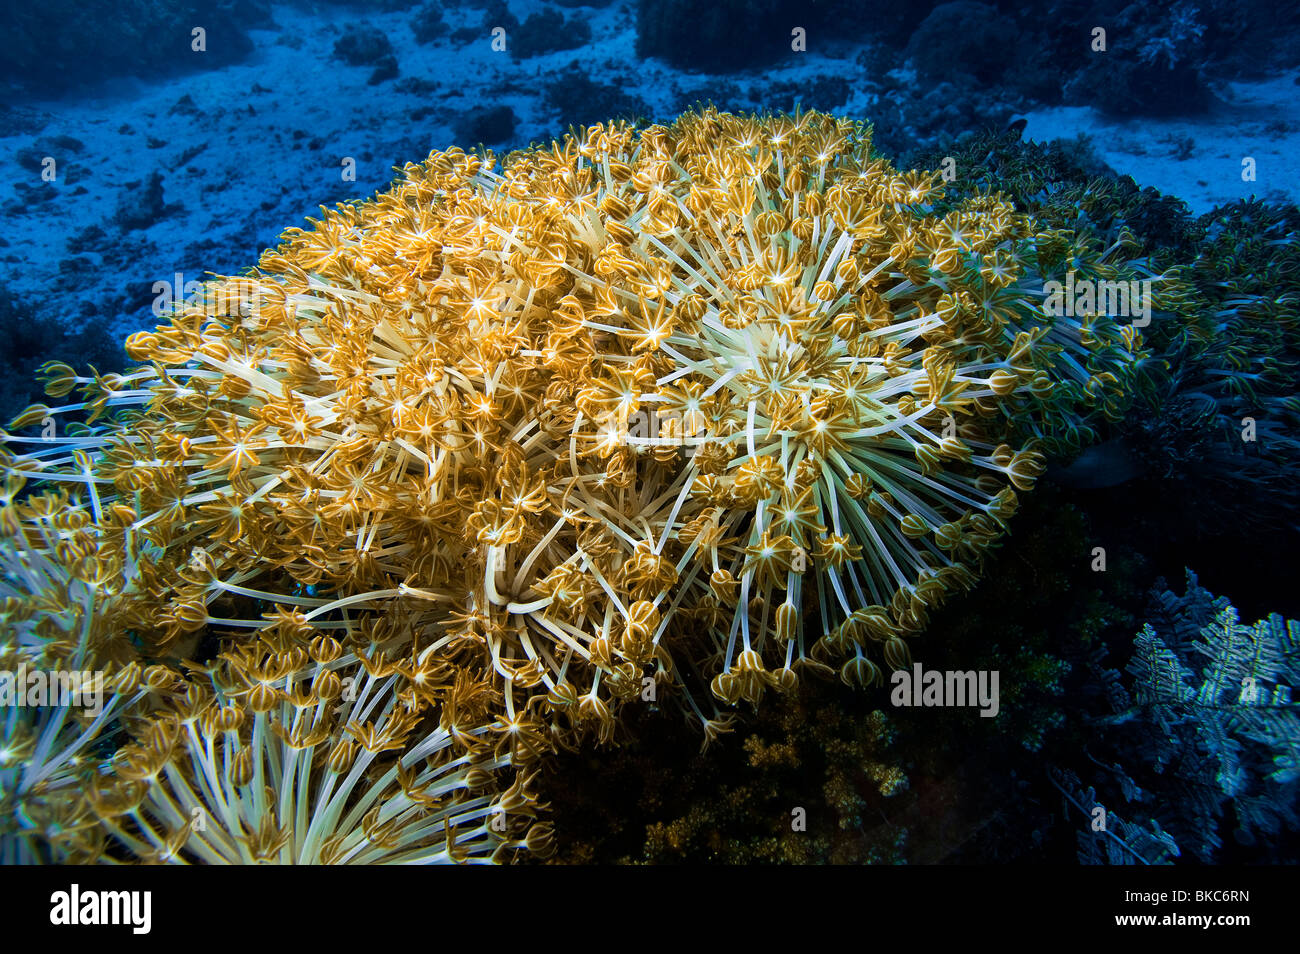 REEF malapascua soft coral sea anemone Corky sea finger Gongonian Briareum asbestinum deadman's fingers flower soft coral xenia Stock Photo